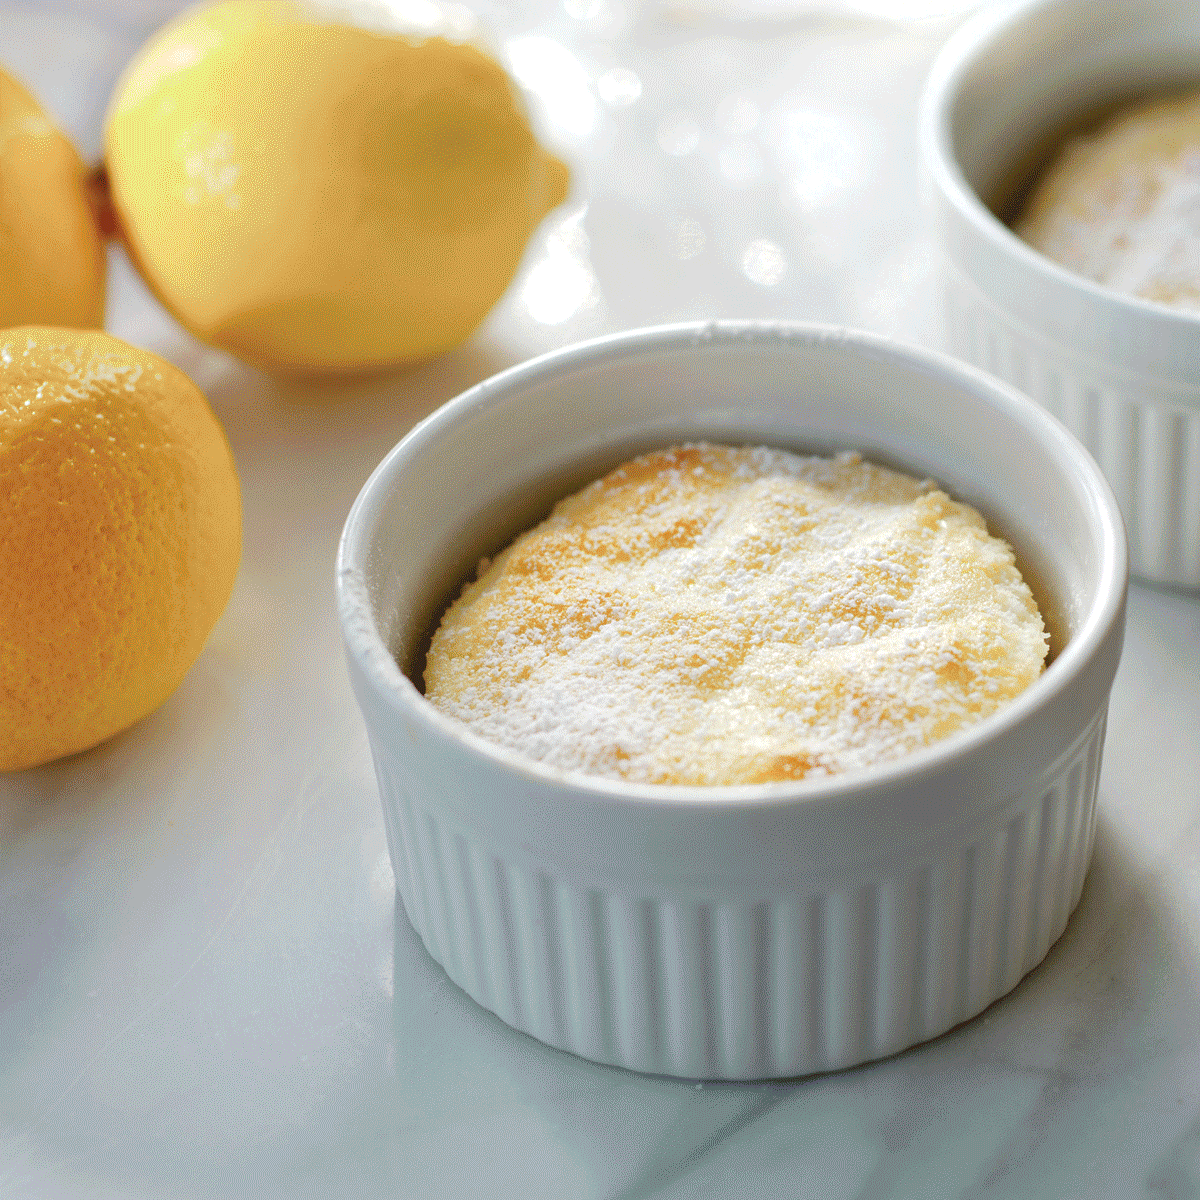 lemon and yogurt pudding cakes